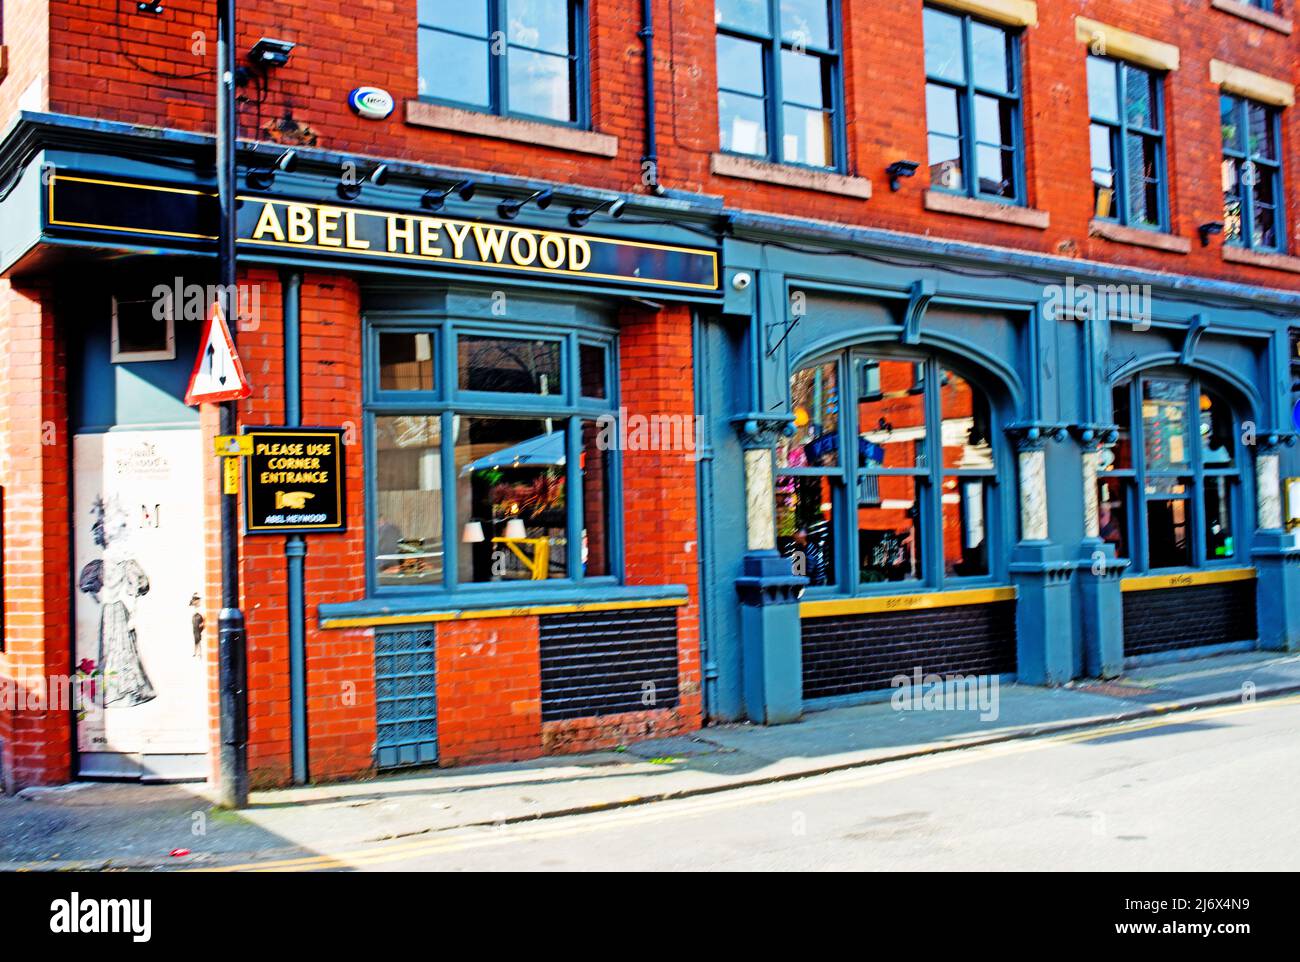 Abel Heywood Pub, Turner Street, Manchester, England Stock Photo